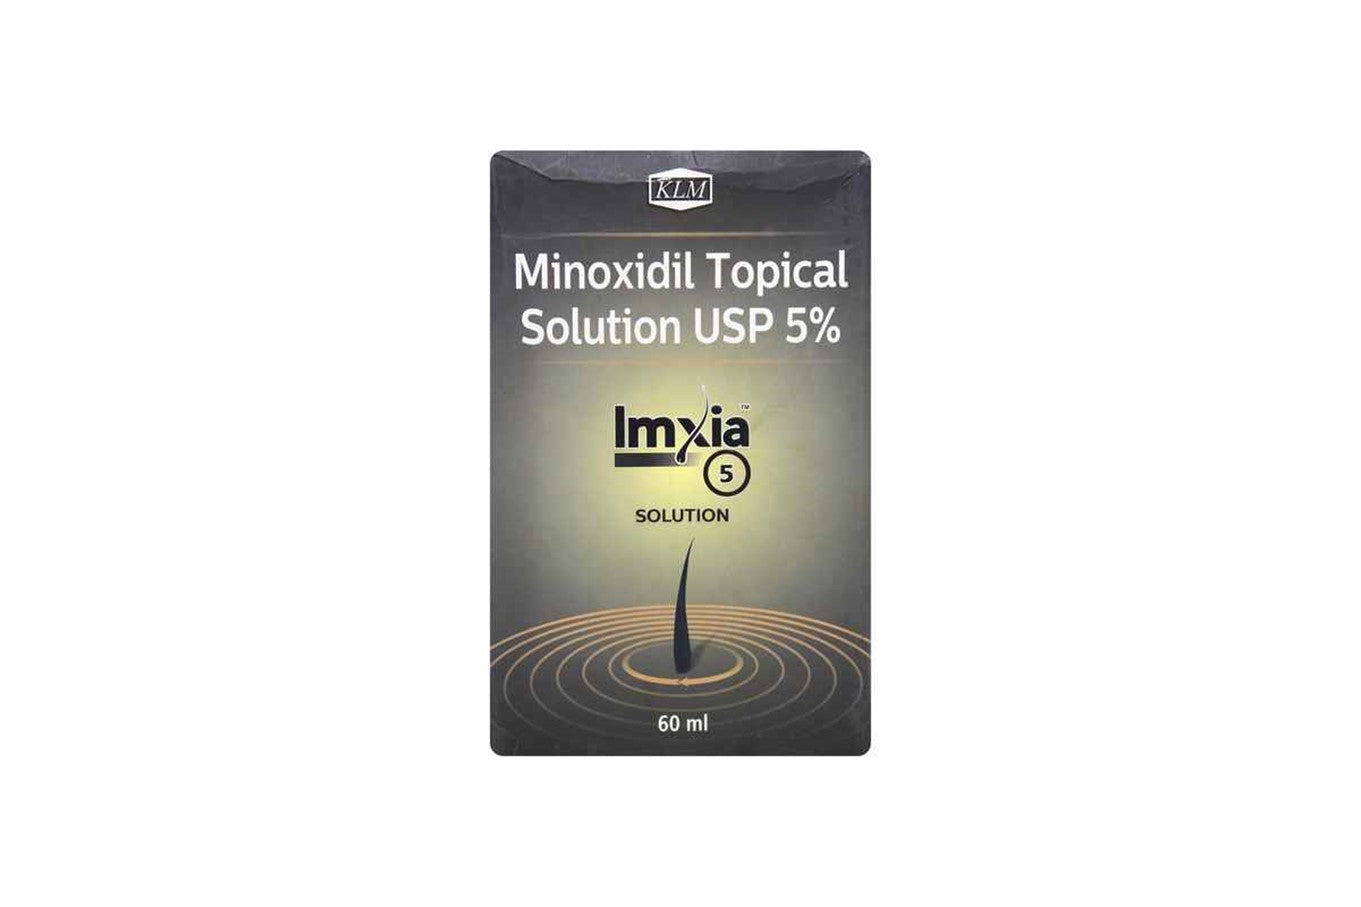 Imxia 5 Solution 60ml